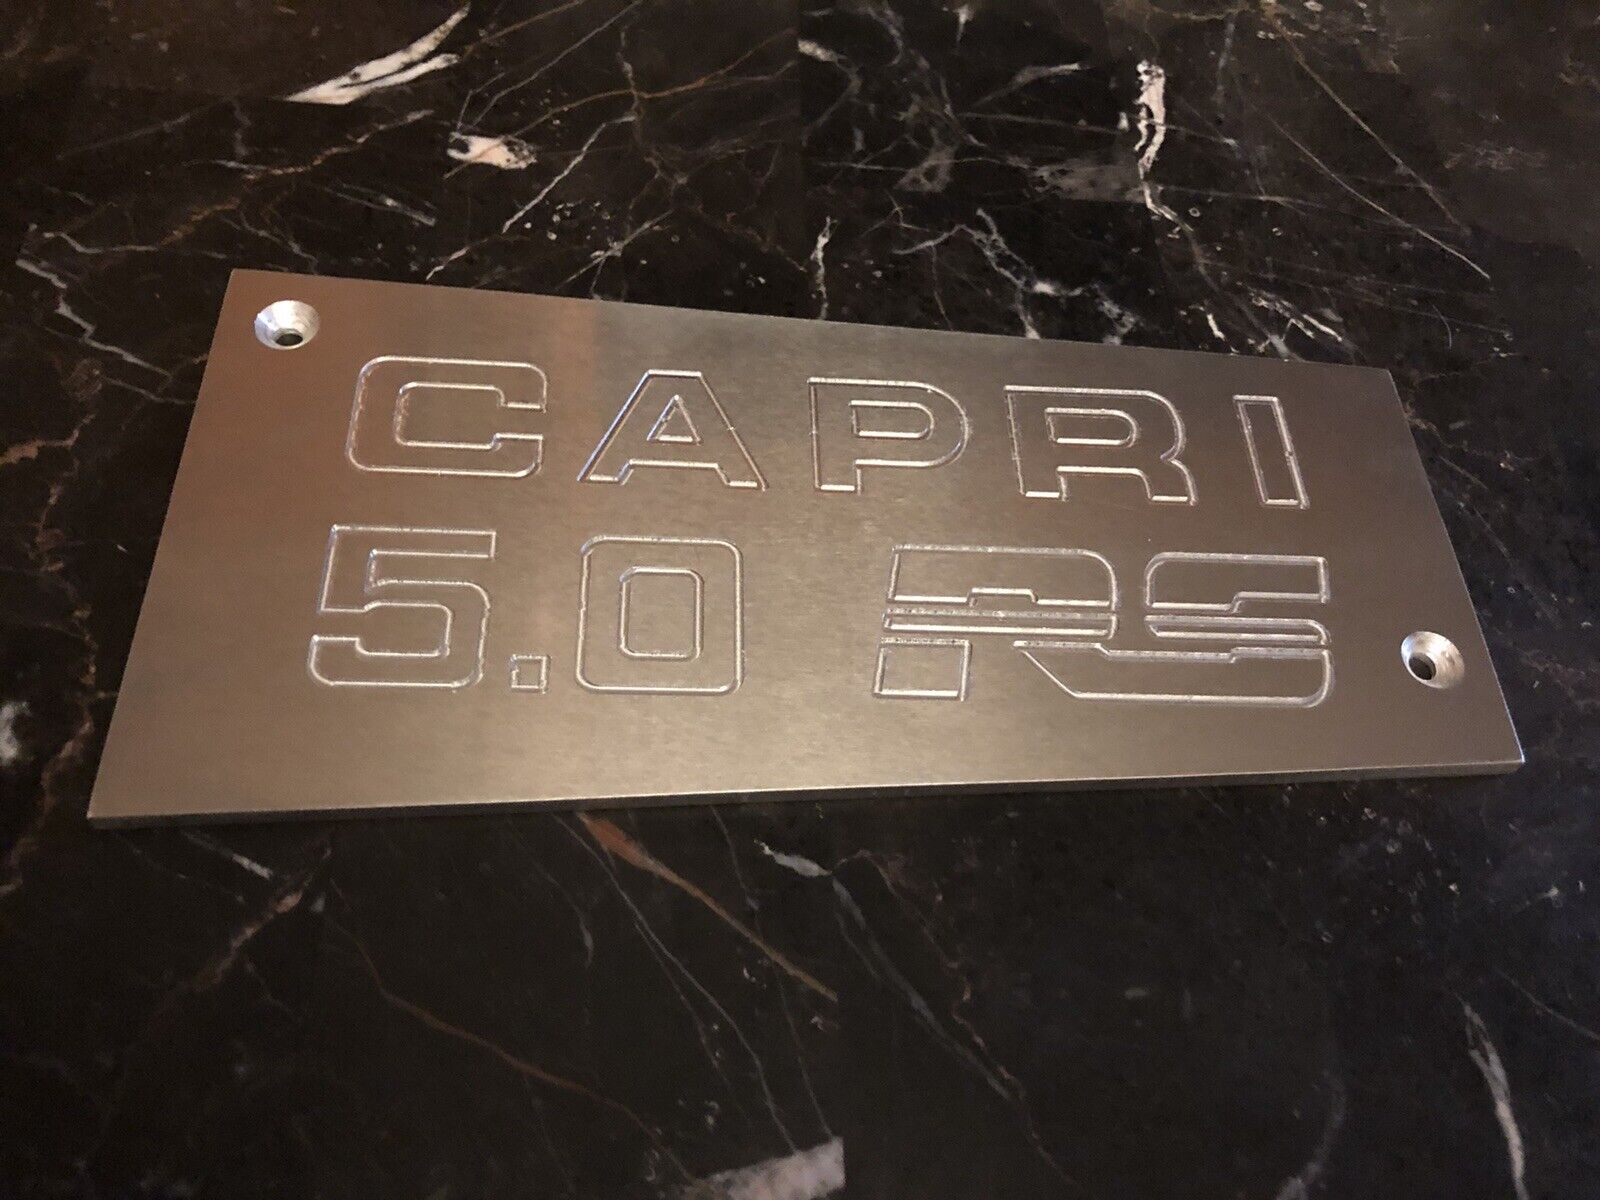 Mercury Capri RS 5.0 custom aluminum intake manifold plate plaque GT40